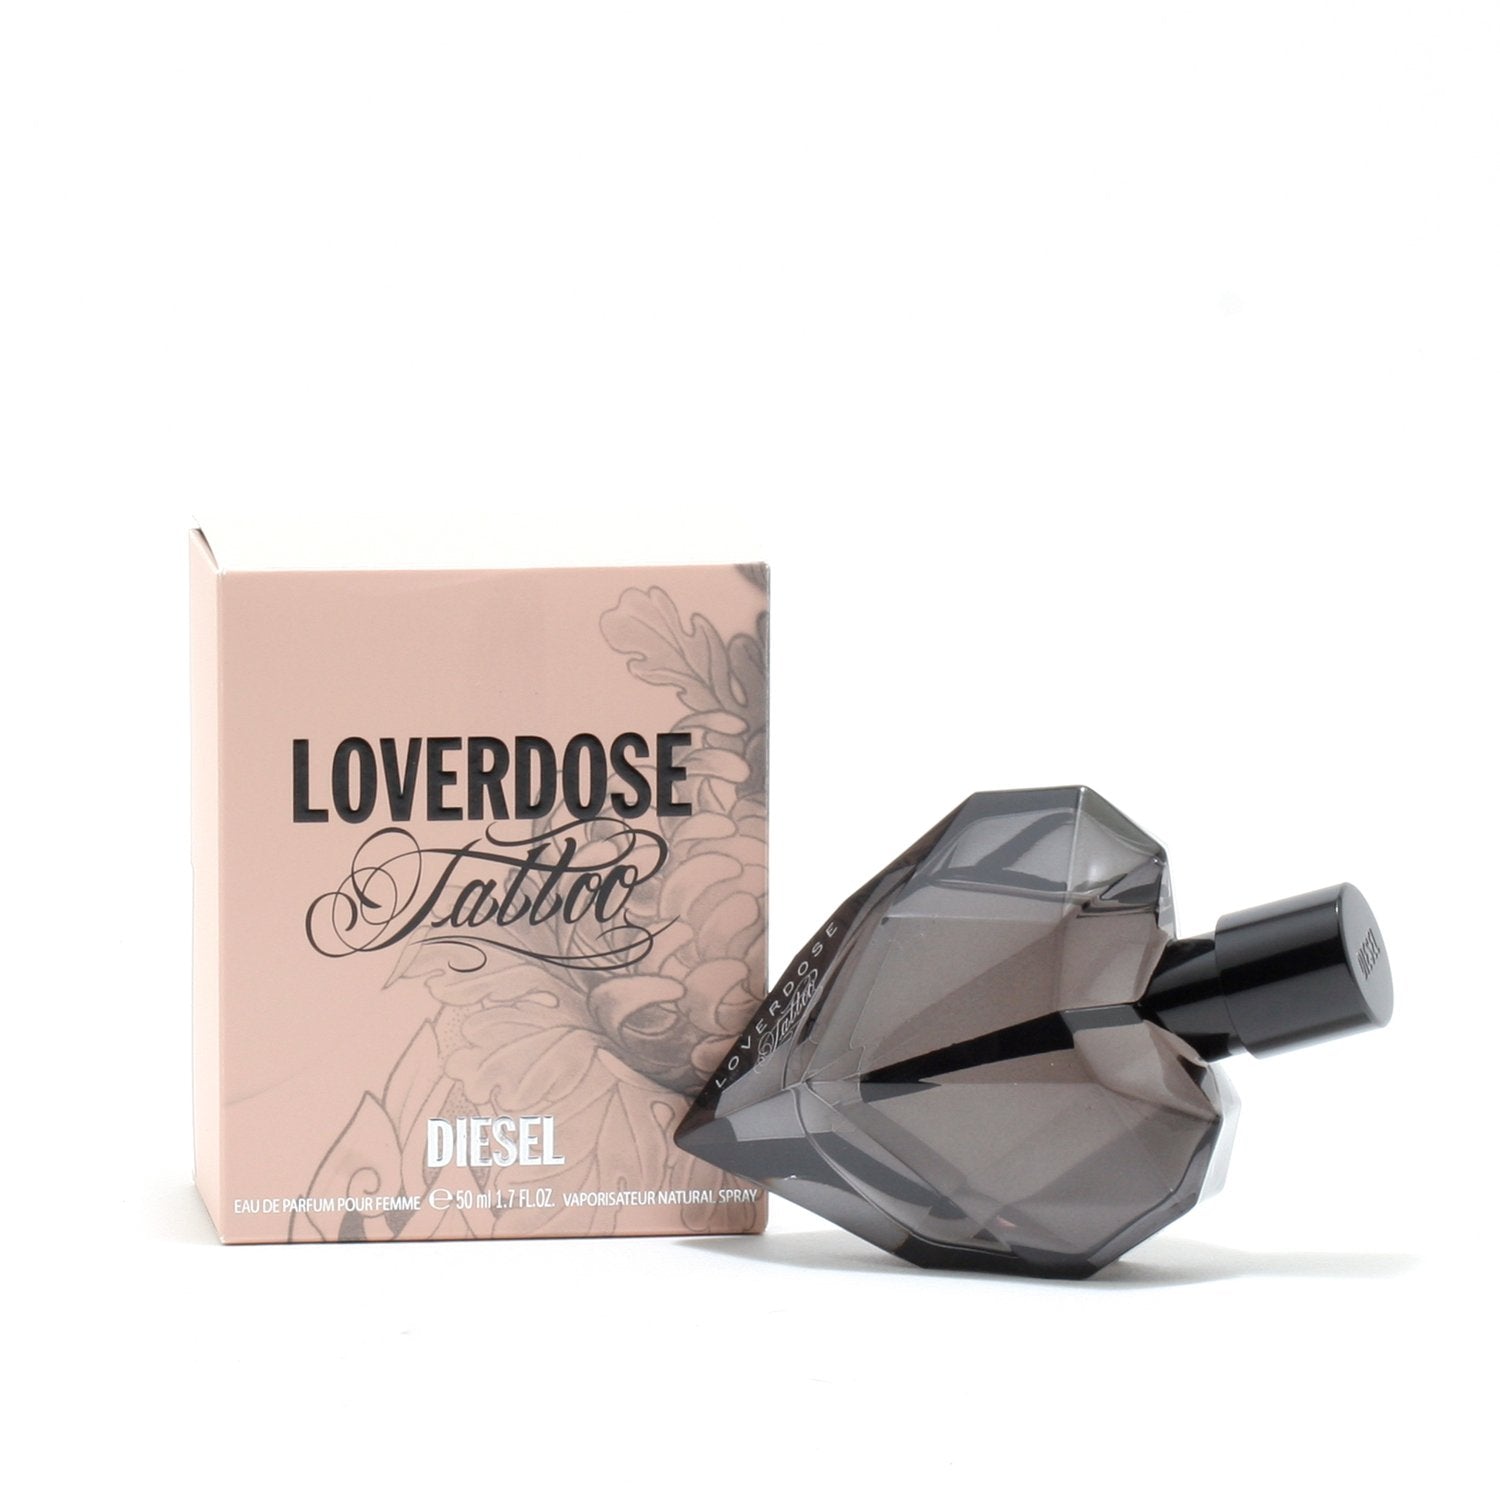 Perfume - DIESEL LOVERDOSE TATTOO FOR WOMEN - EAU DE PARFUM SPRAY